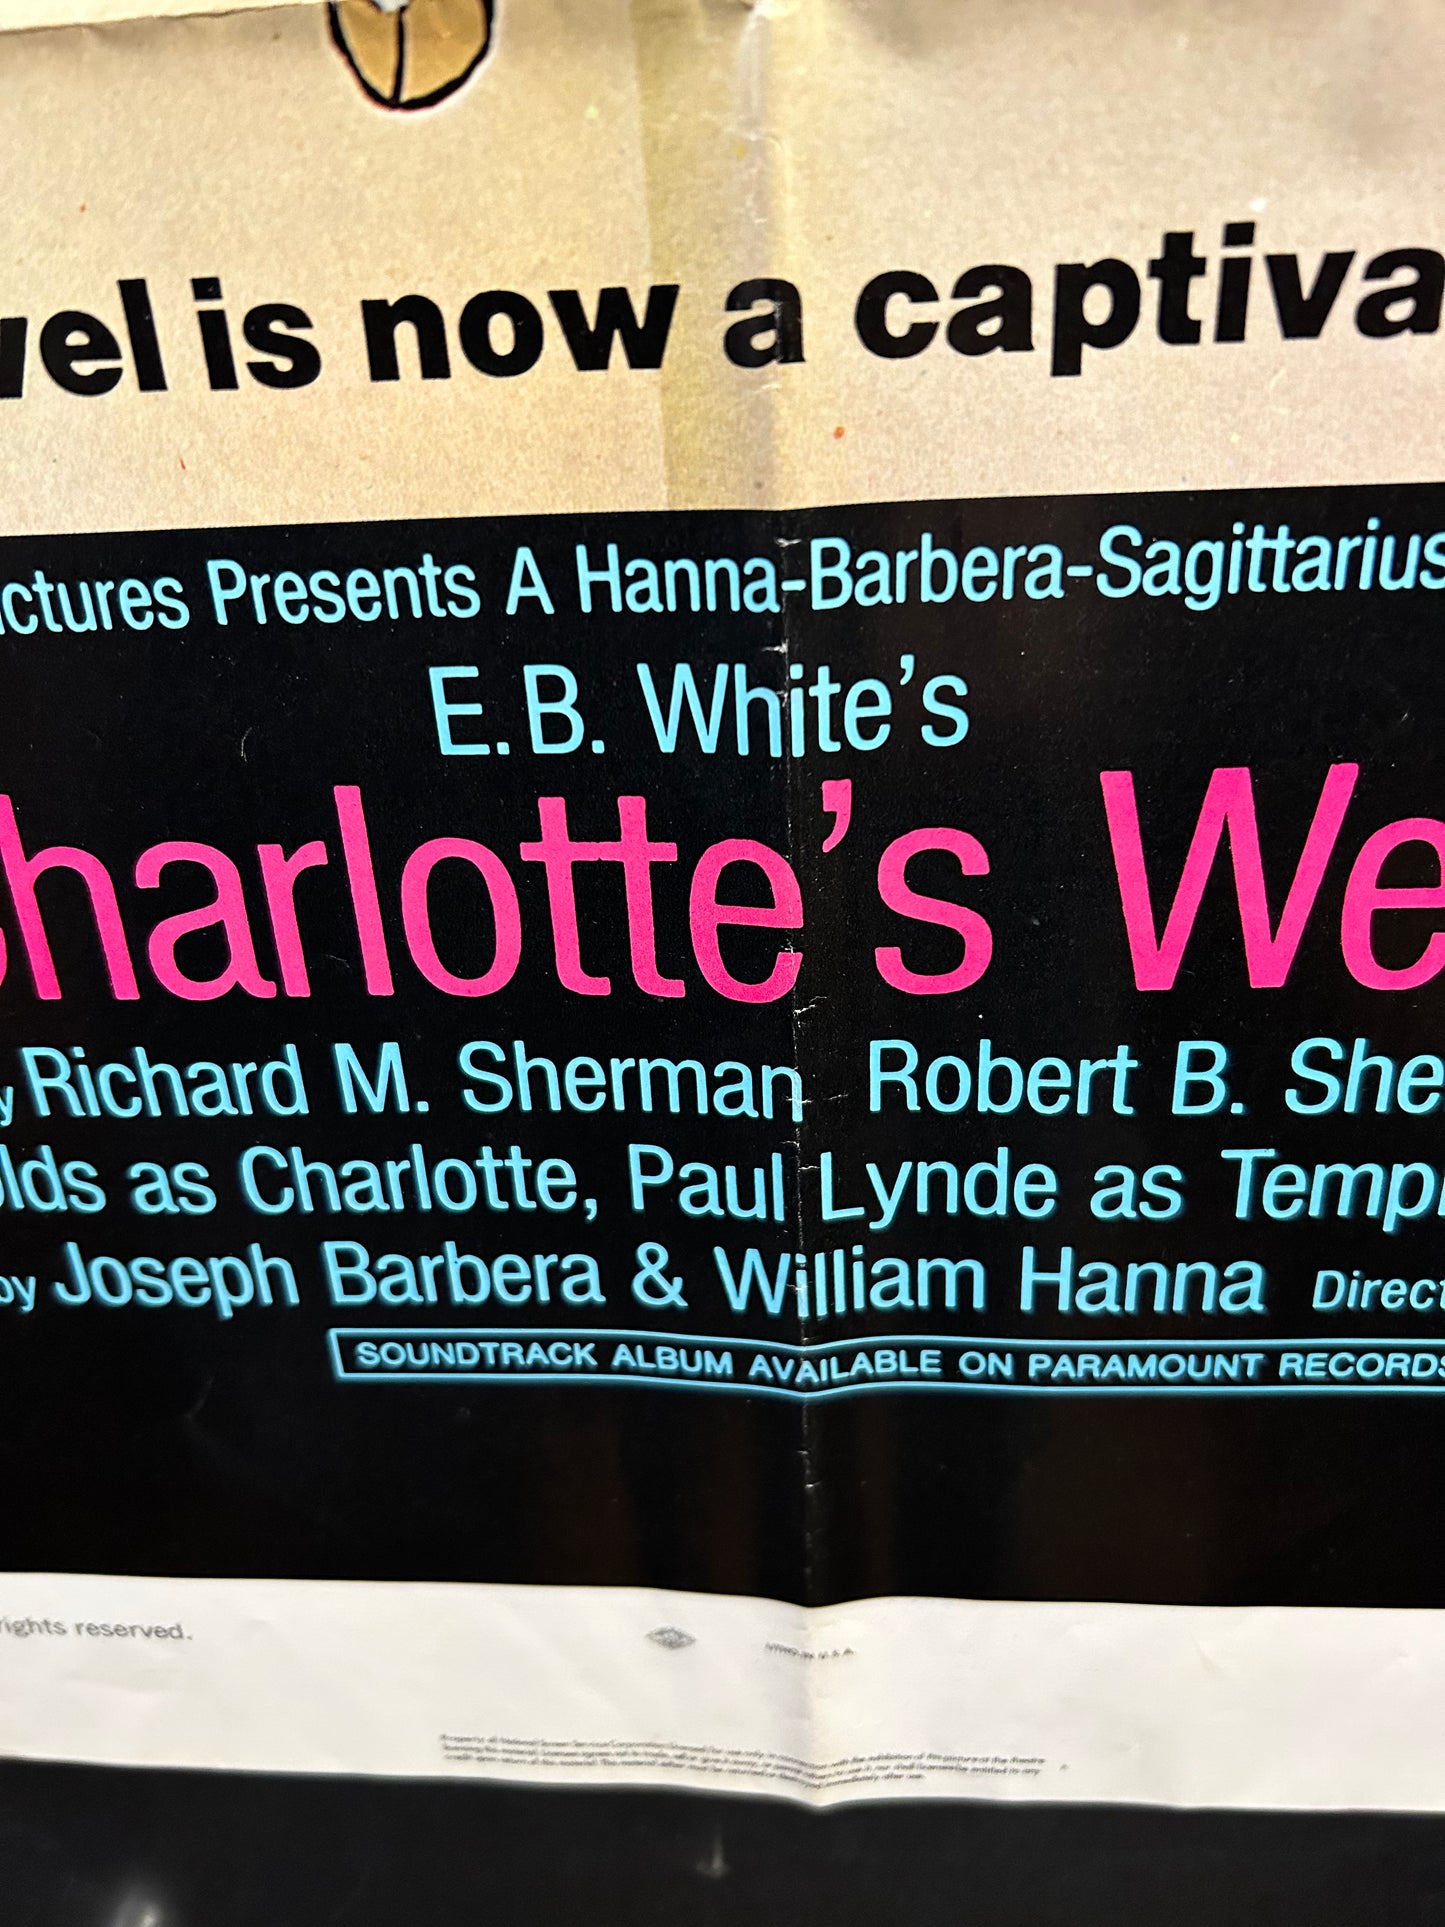 Charlotte's Web Original One Sheet Poster 1973